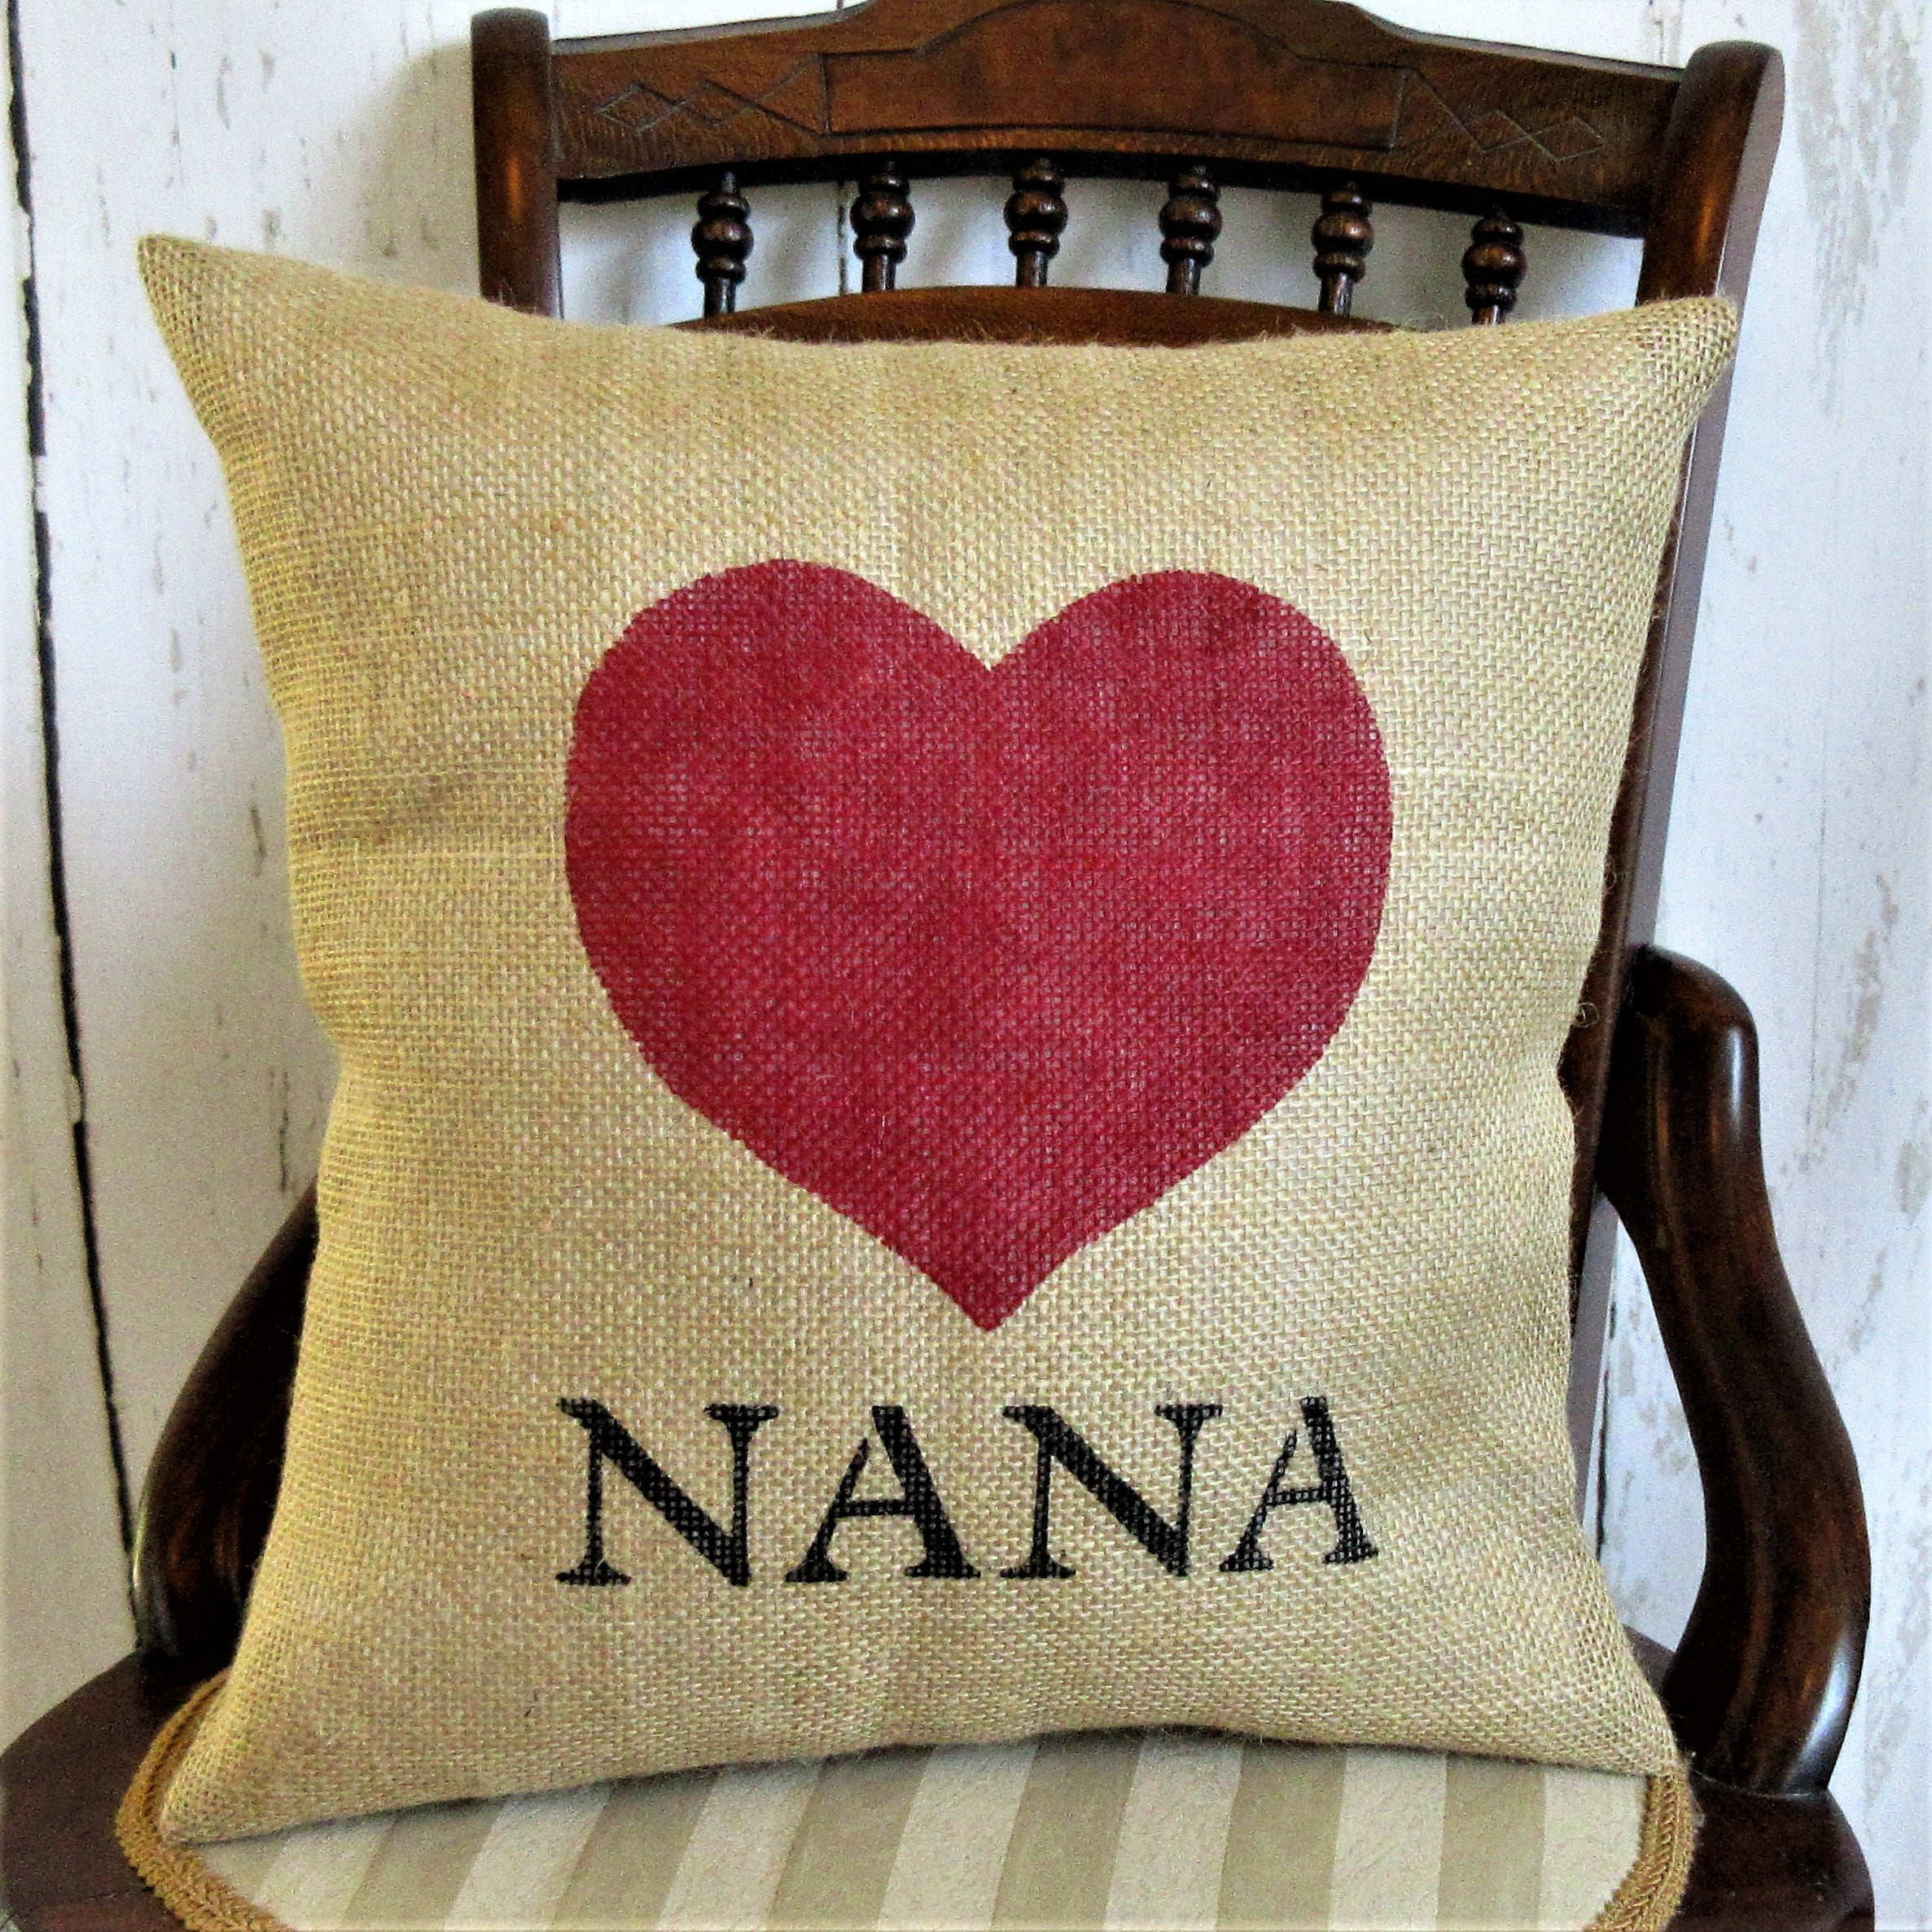 Nana Custom Name Heart Burlap Pillow